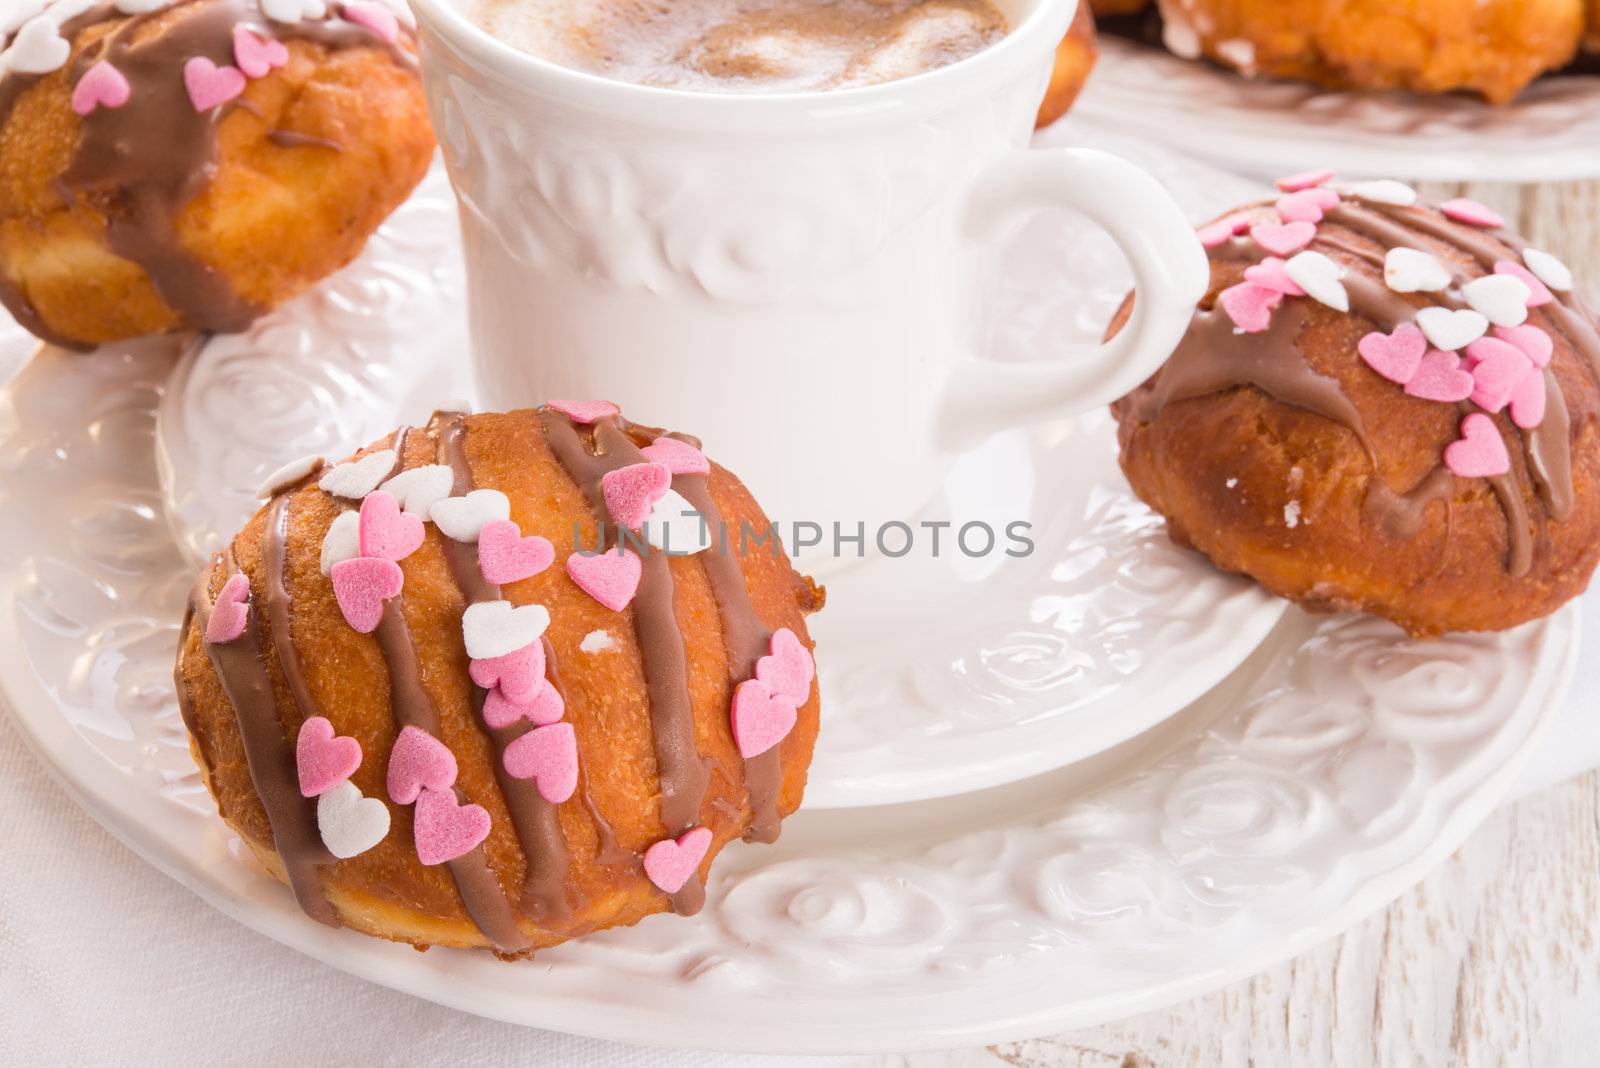 bismarck doughnuts on a plate by Darius.Dzinnik